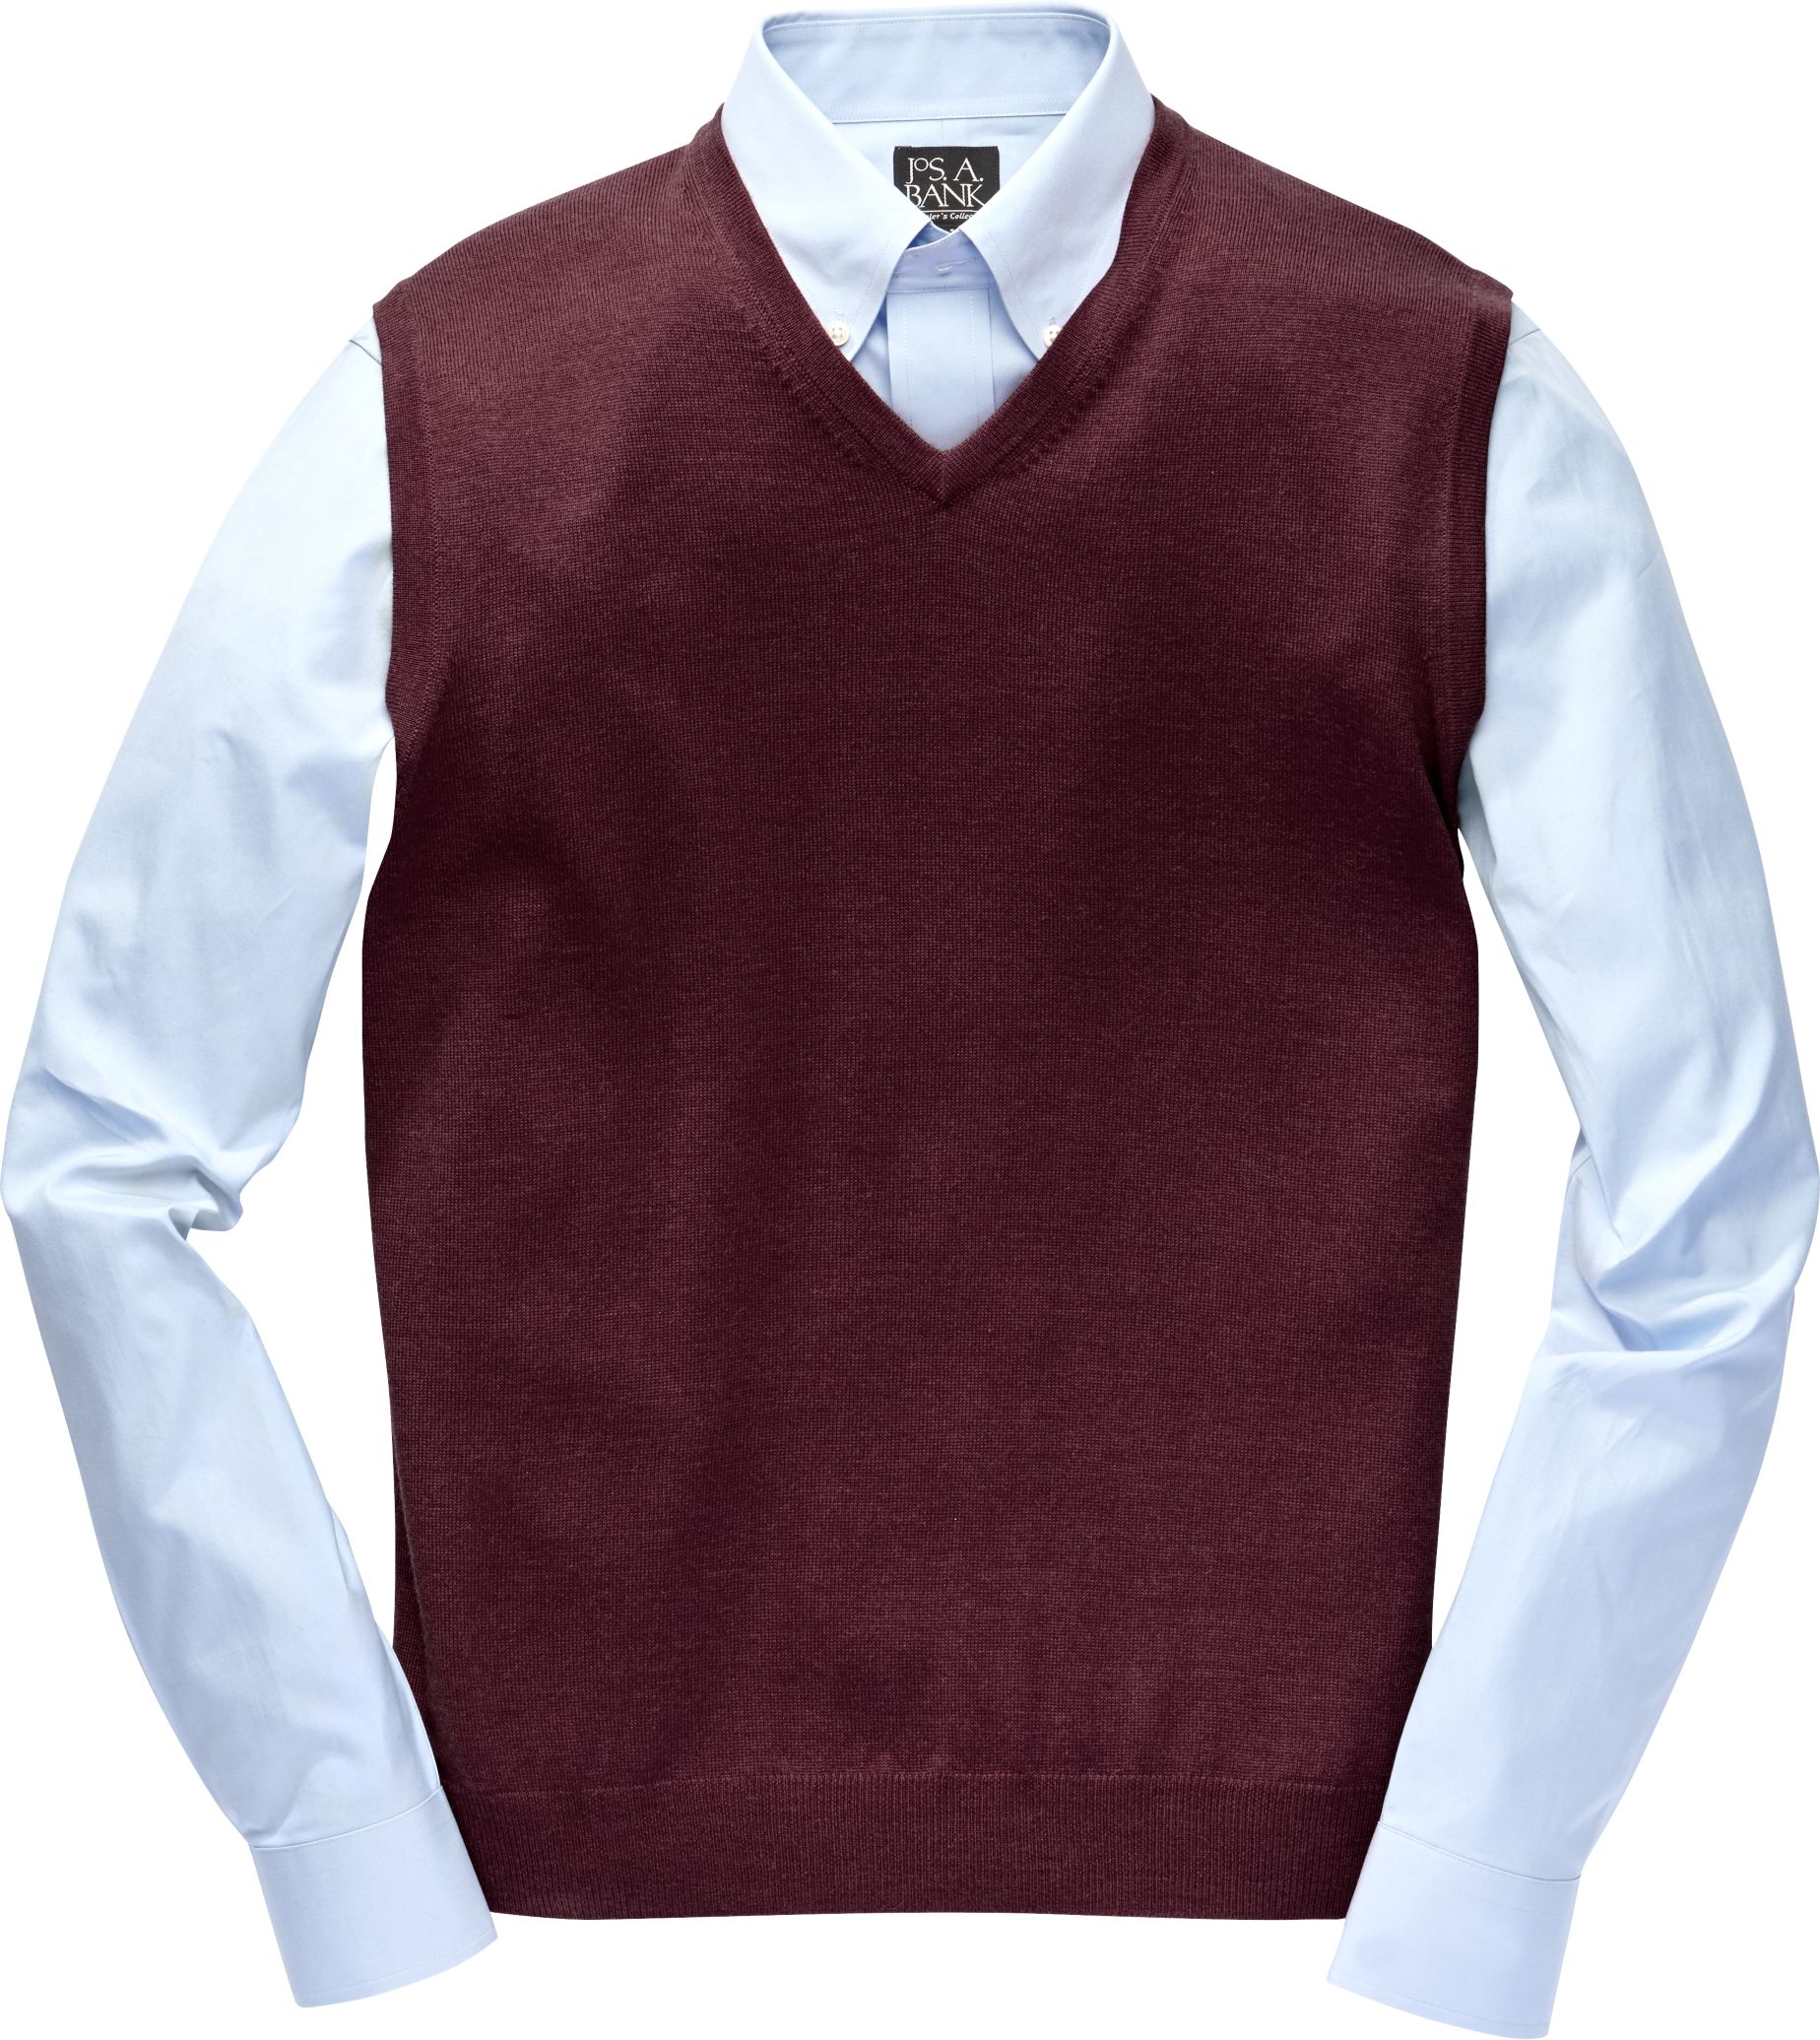 Sweater Vests | Men's Sweaters | JoS. A. Bank Clothiers